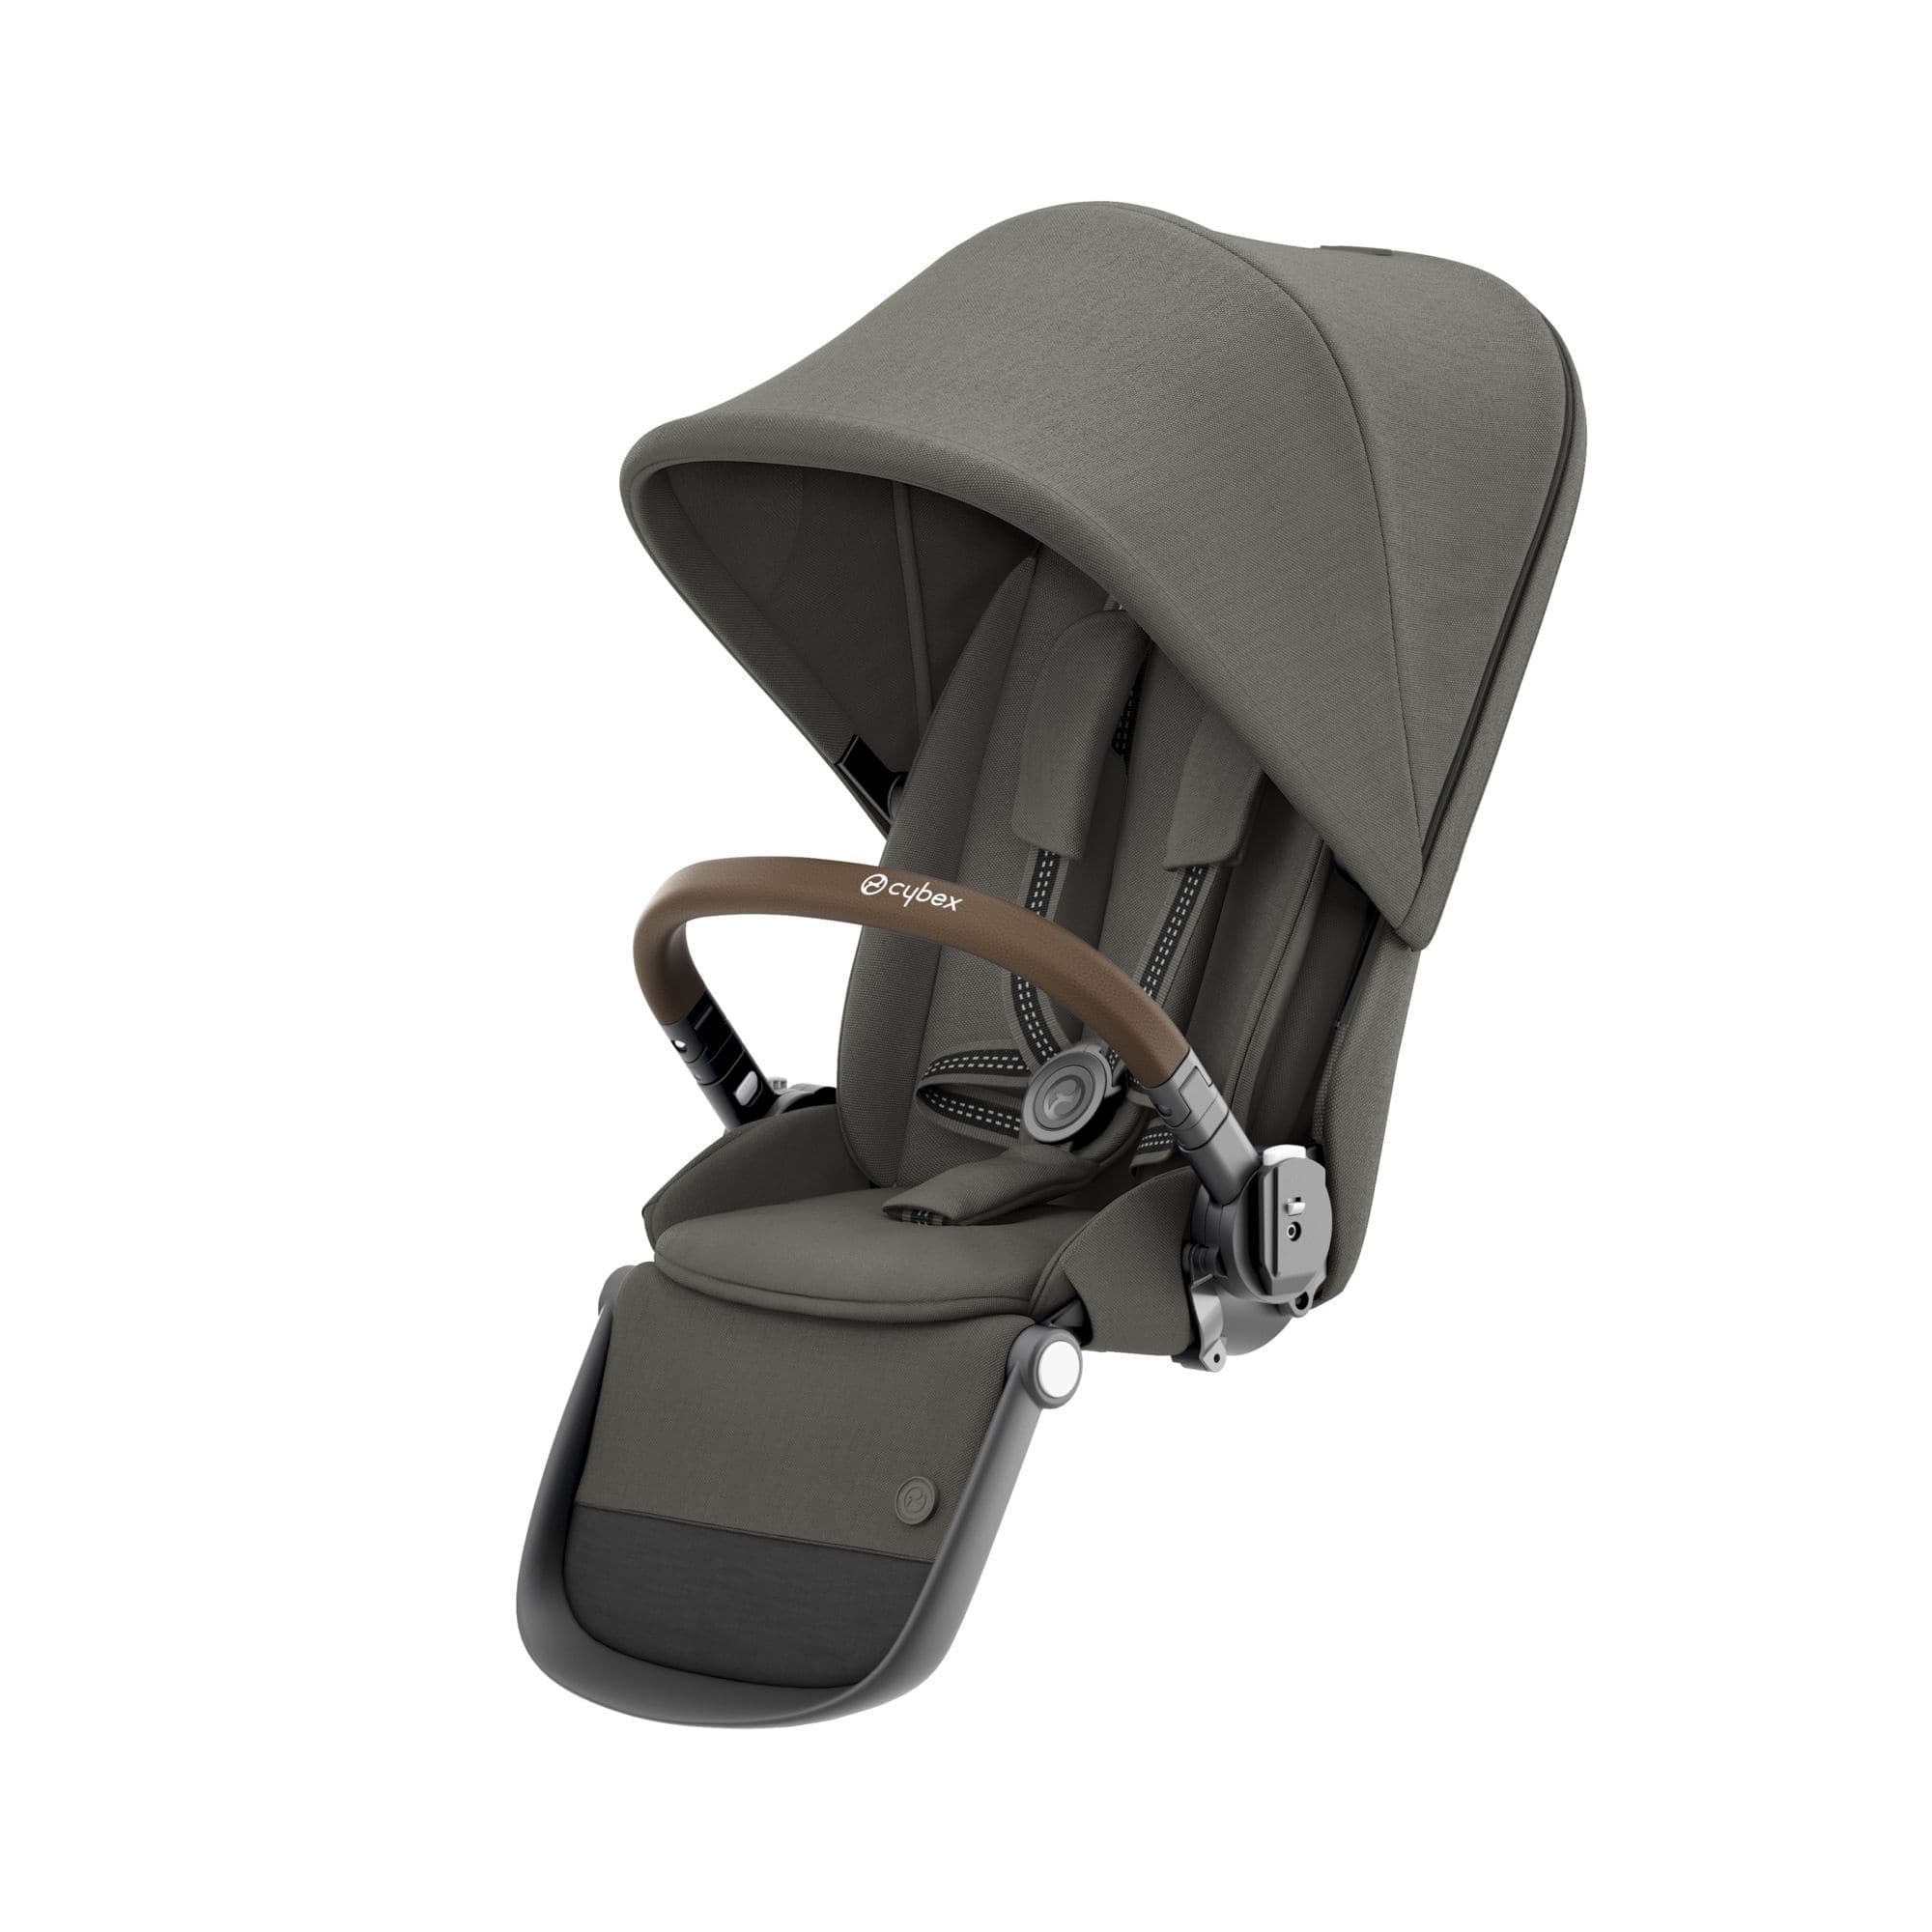 Cybex Gazelle S Seat - ANB Baby -$100 - $300